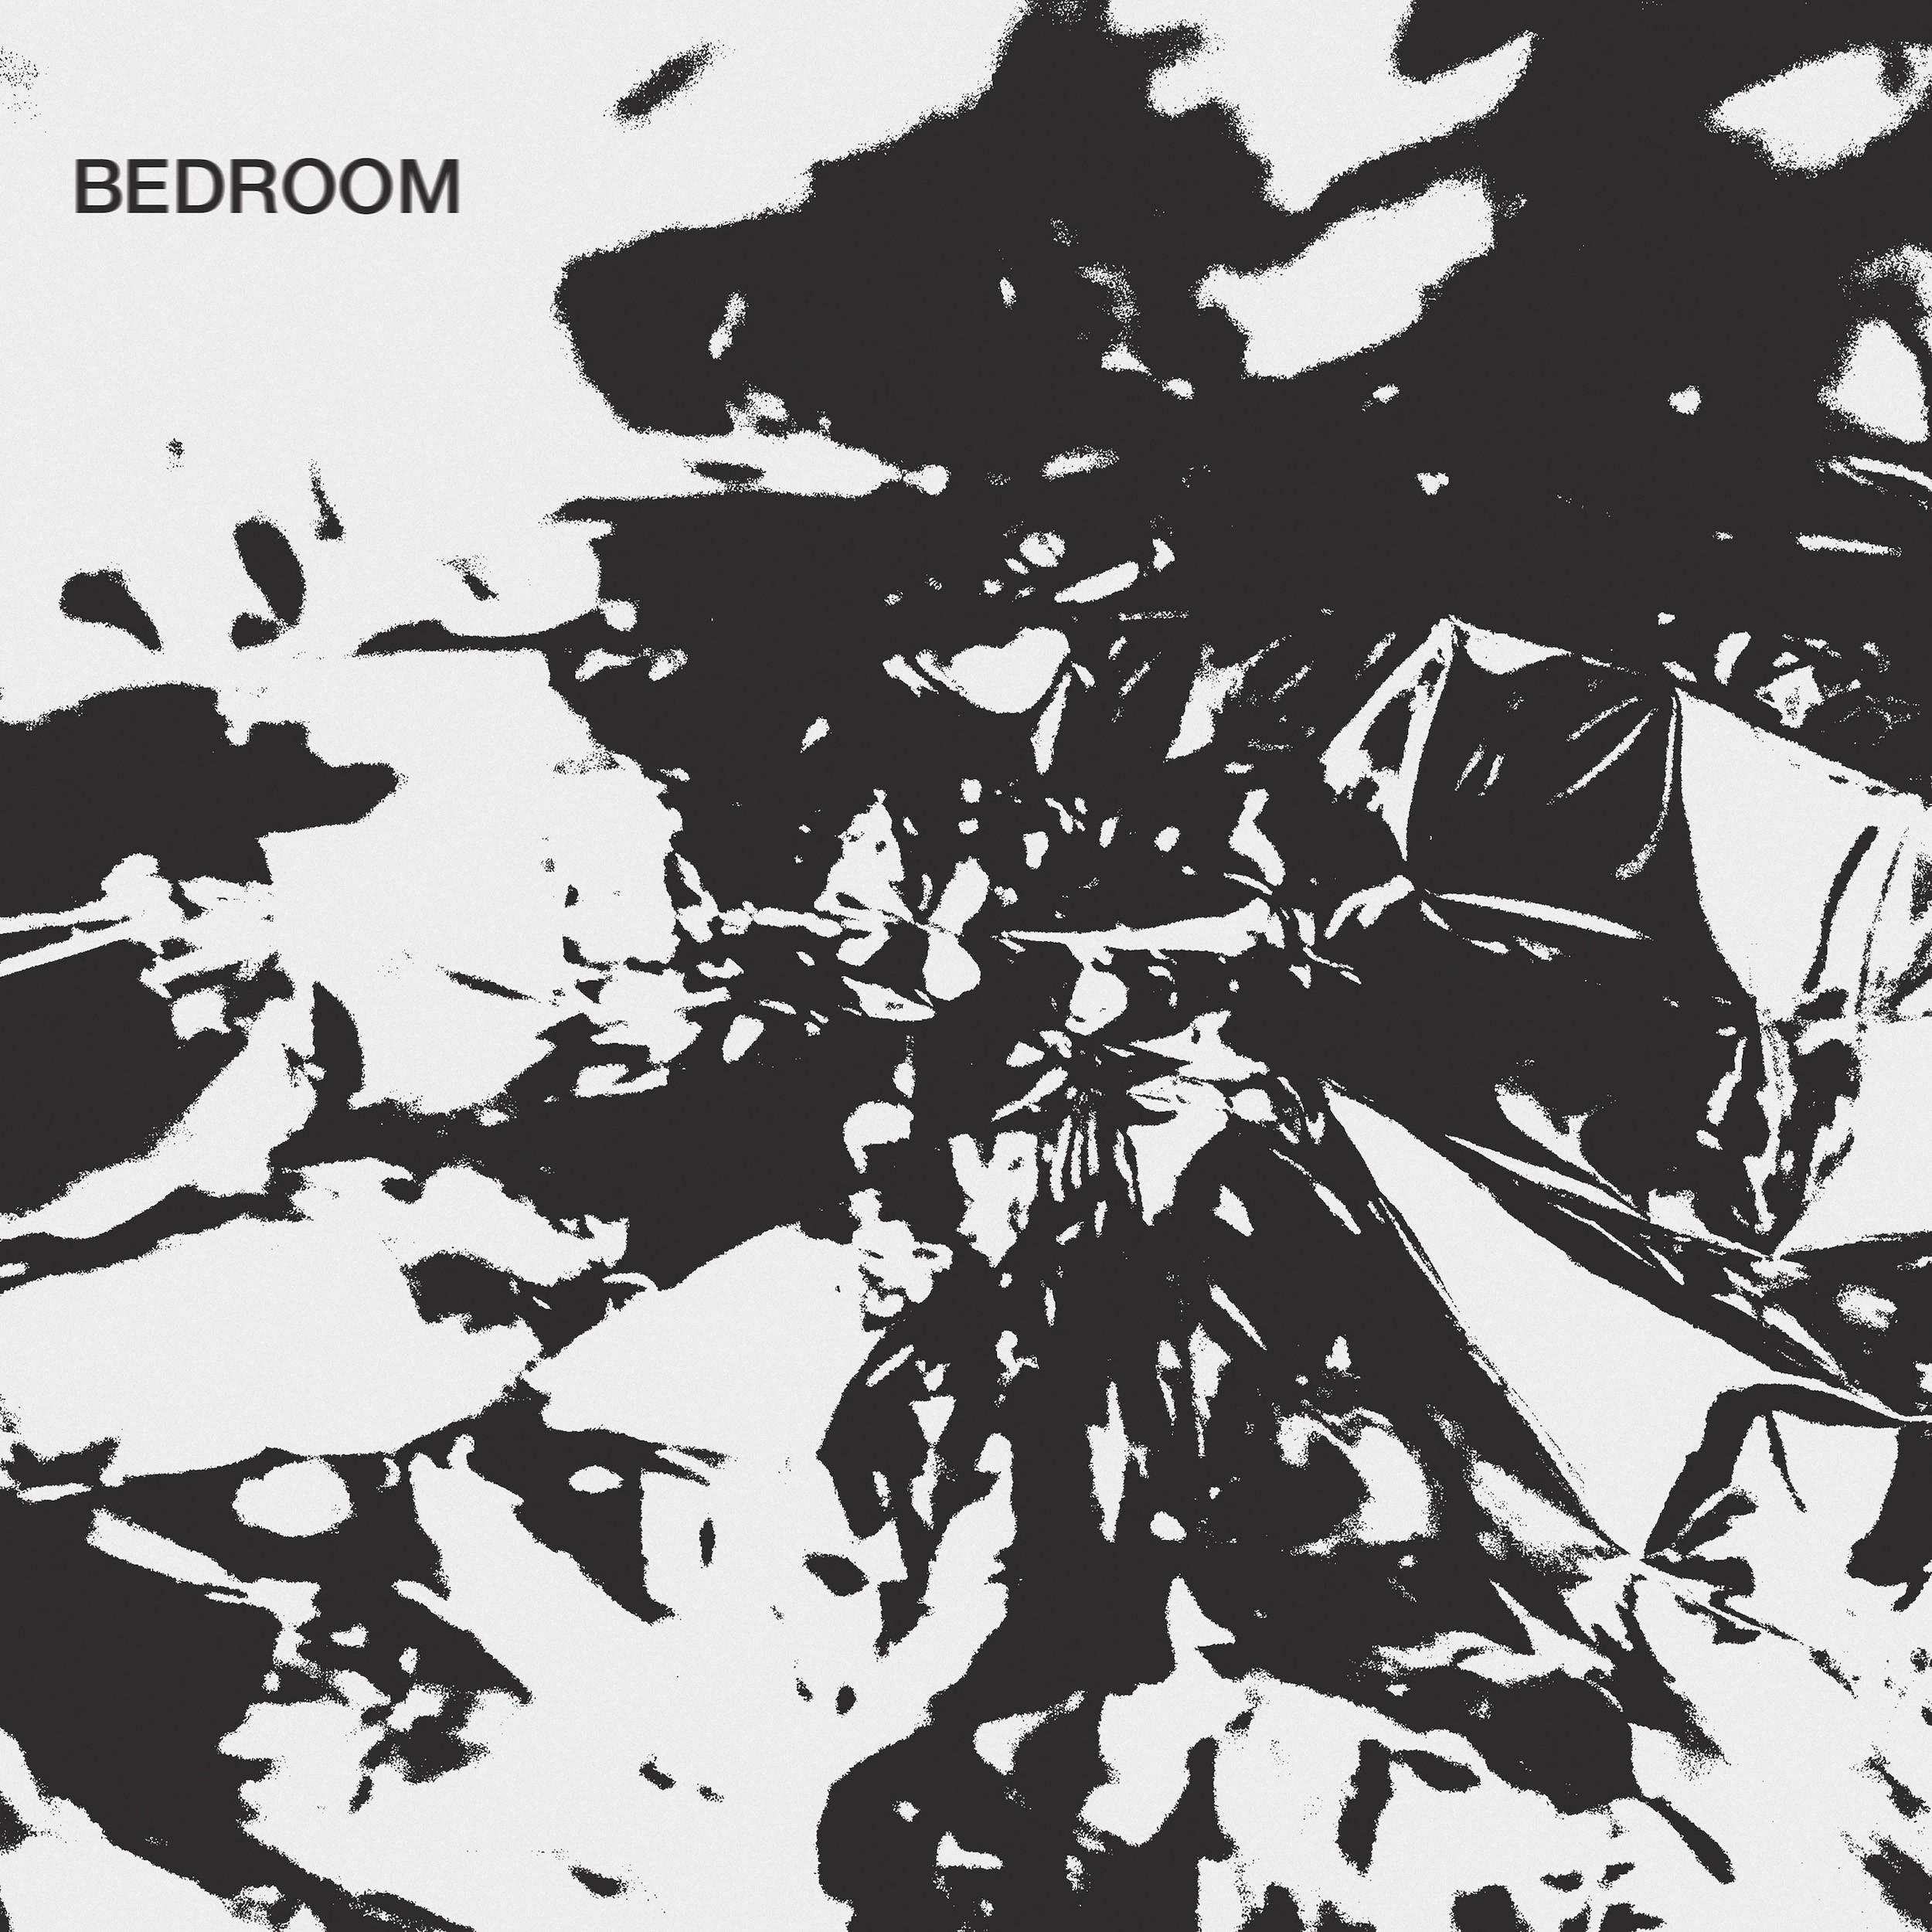 Bedroom / bdrmm